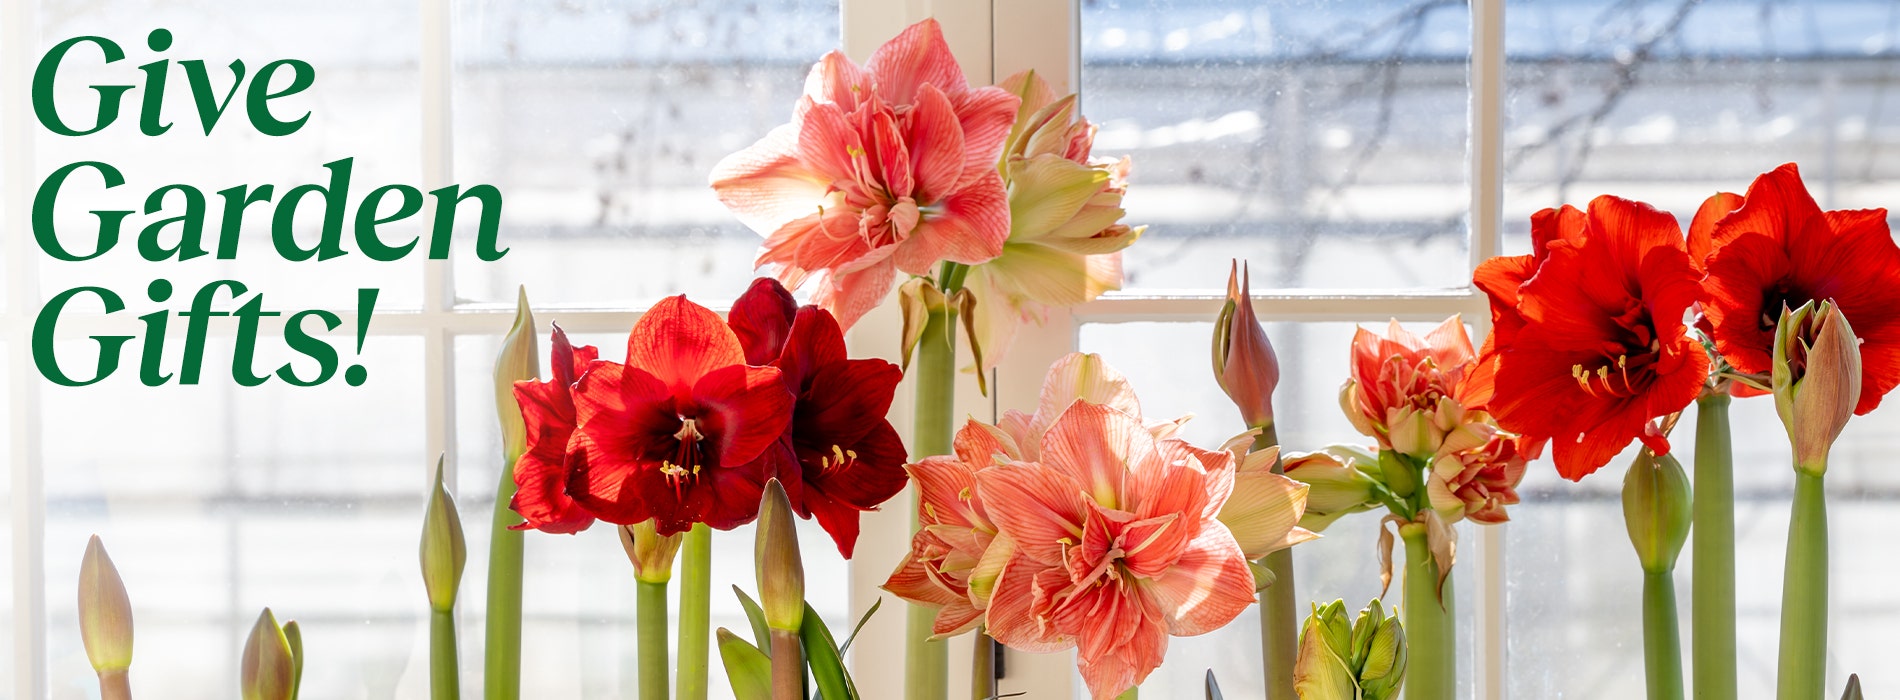 Burpee Holiday Gift Guide - Amaryllis flowers